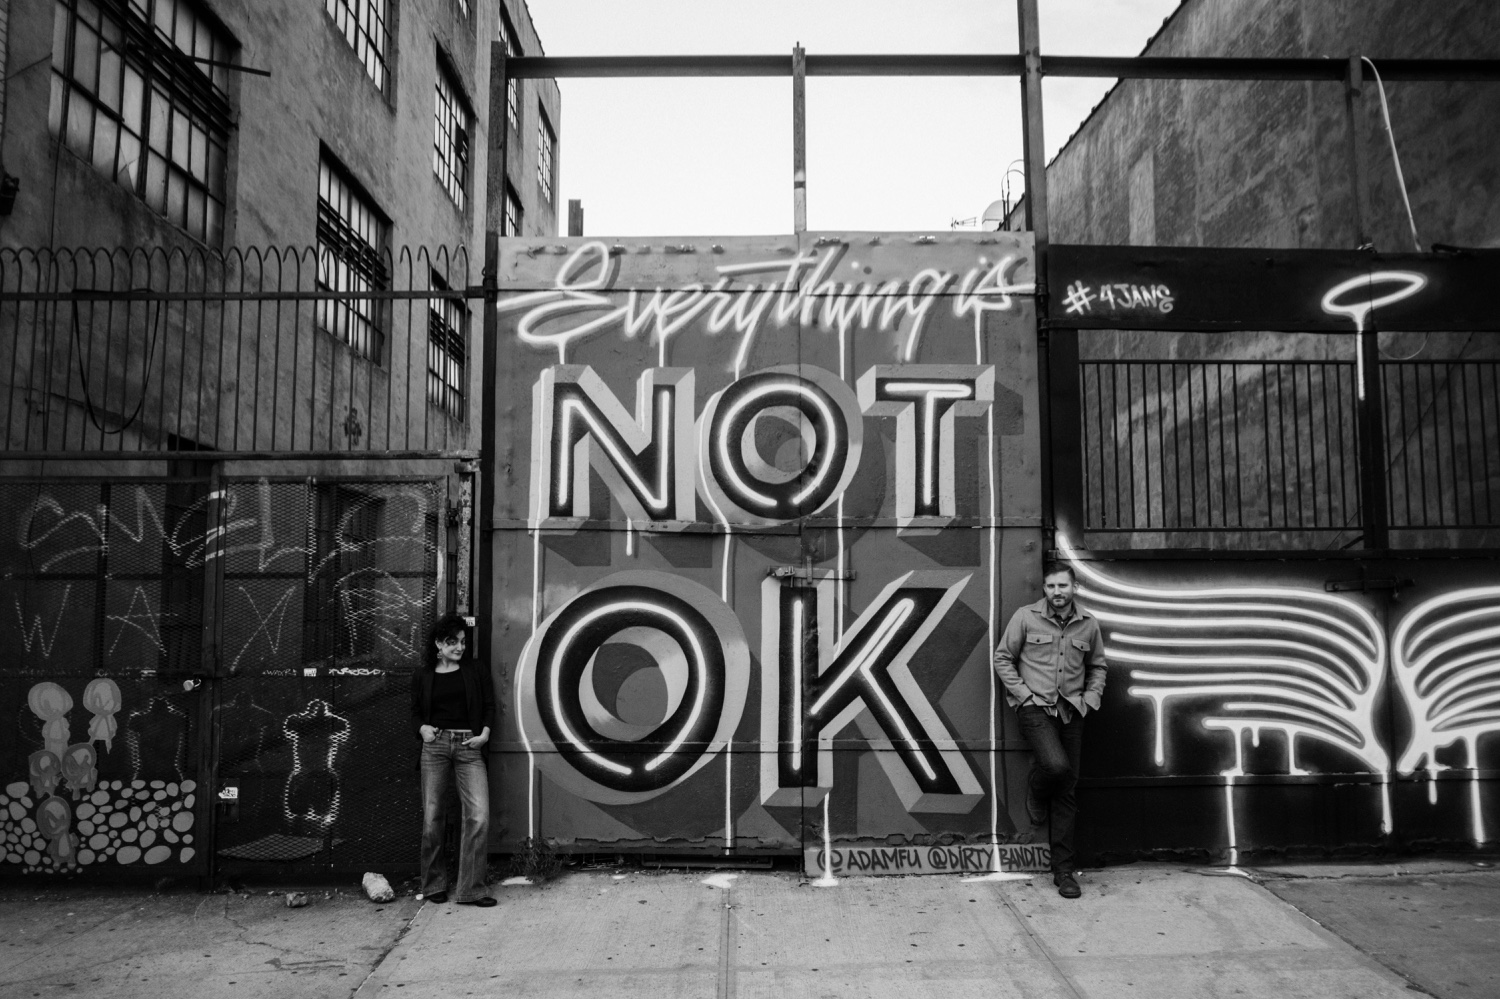 Alternative hipster engagement session in Bushwick, Brooklyn